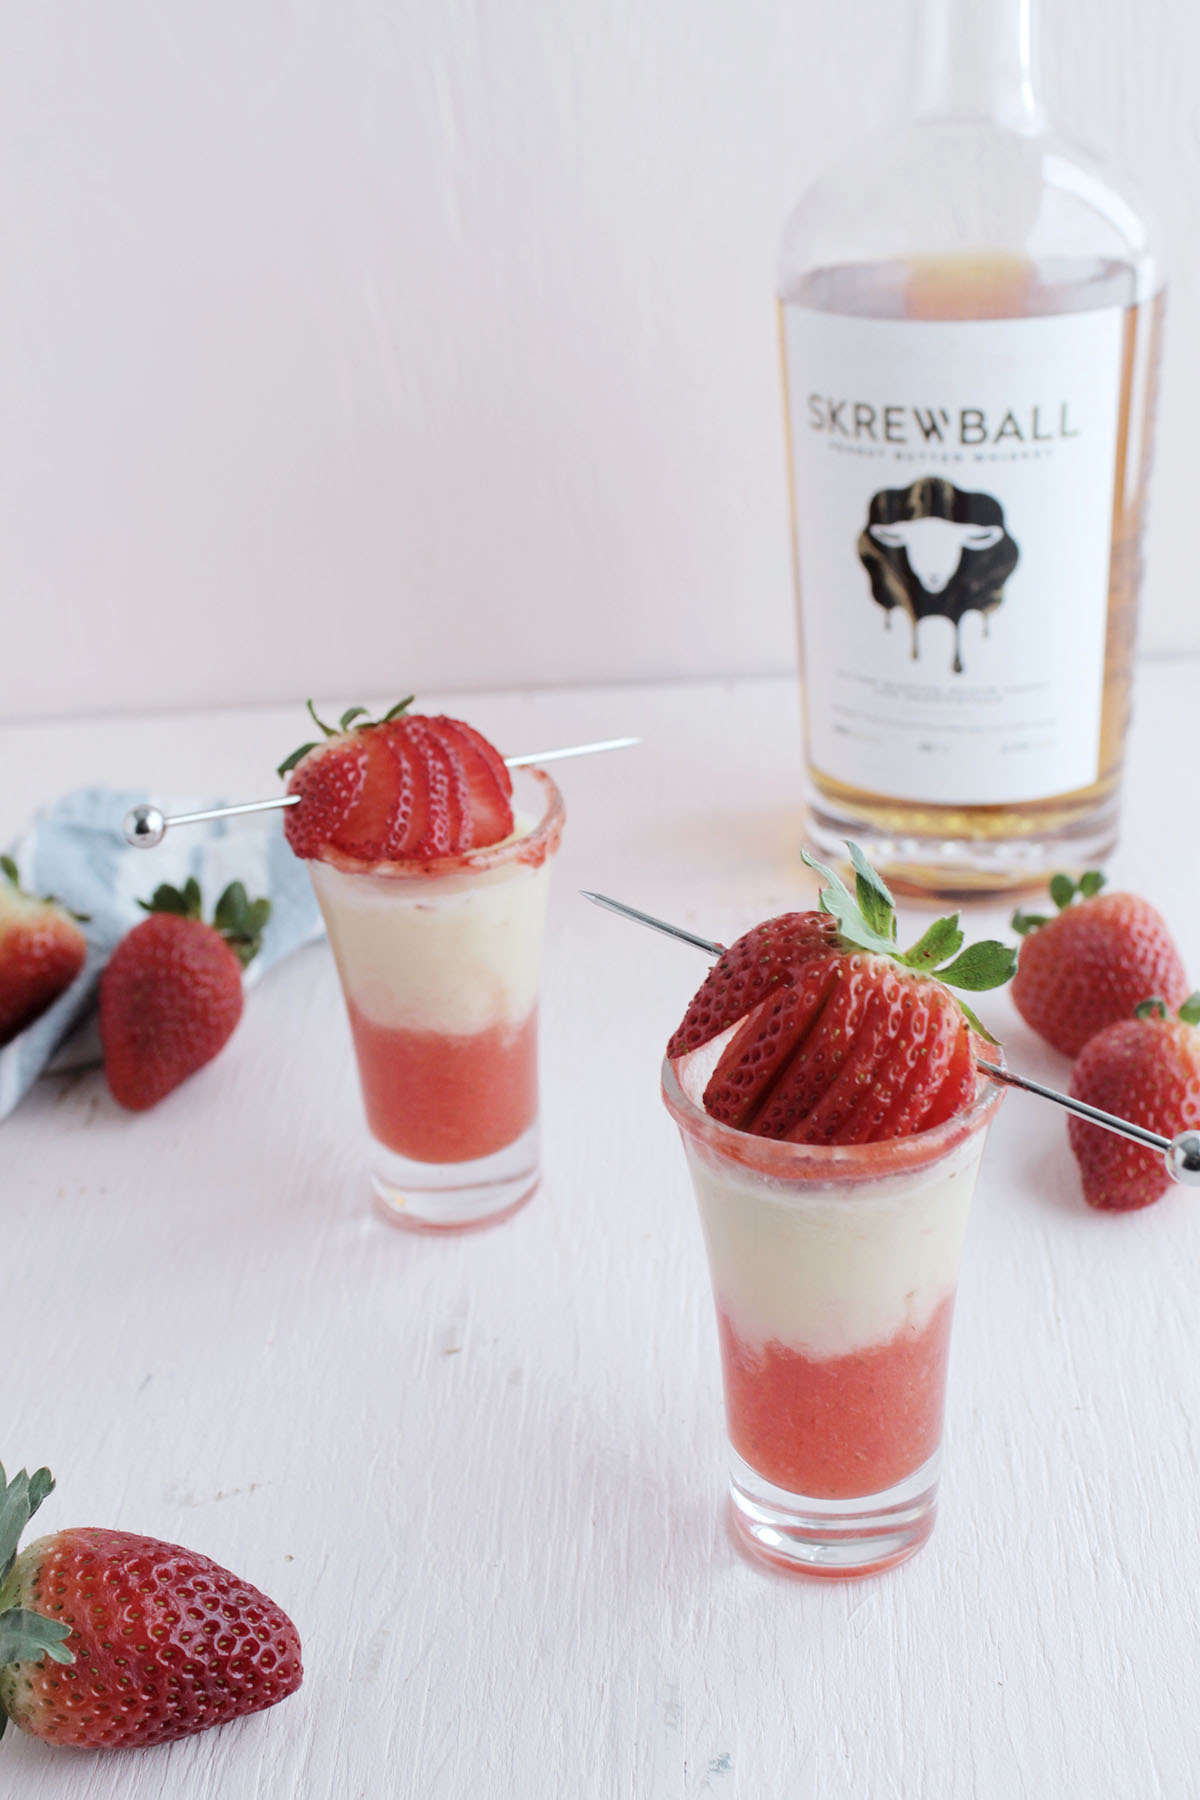 skrewball shot recipe with strawberry garnish